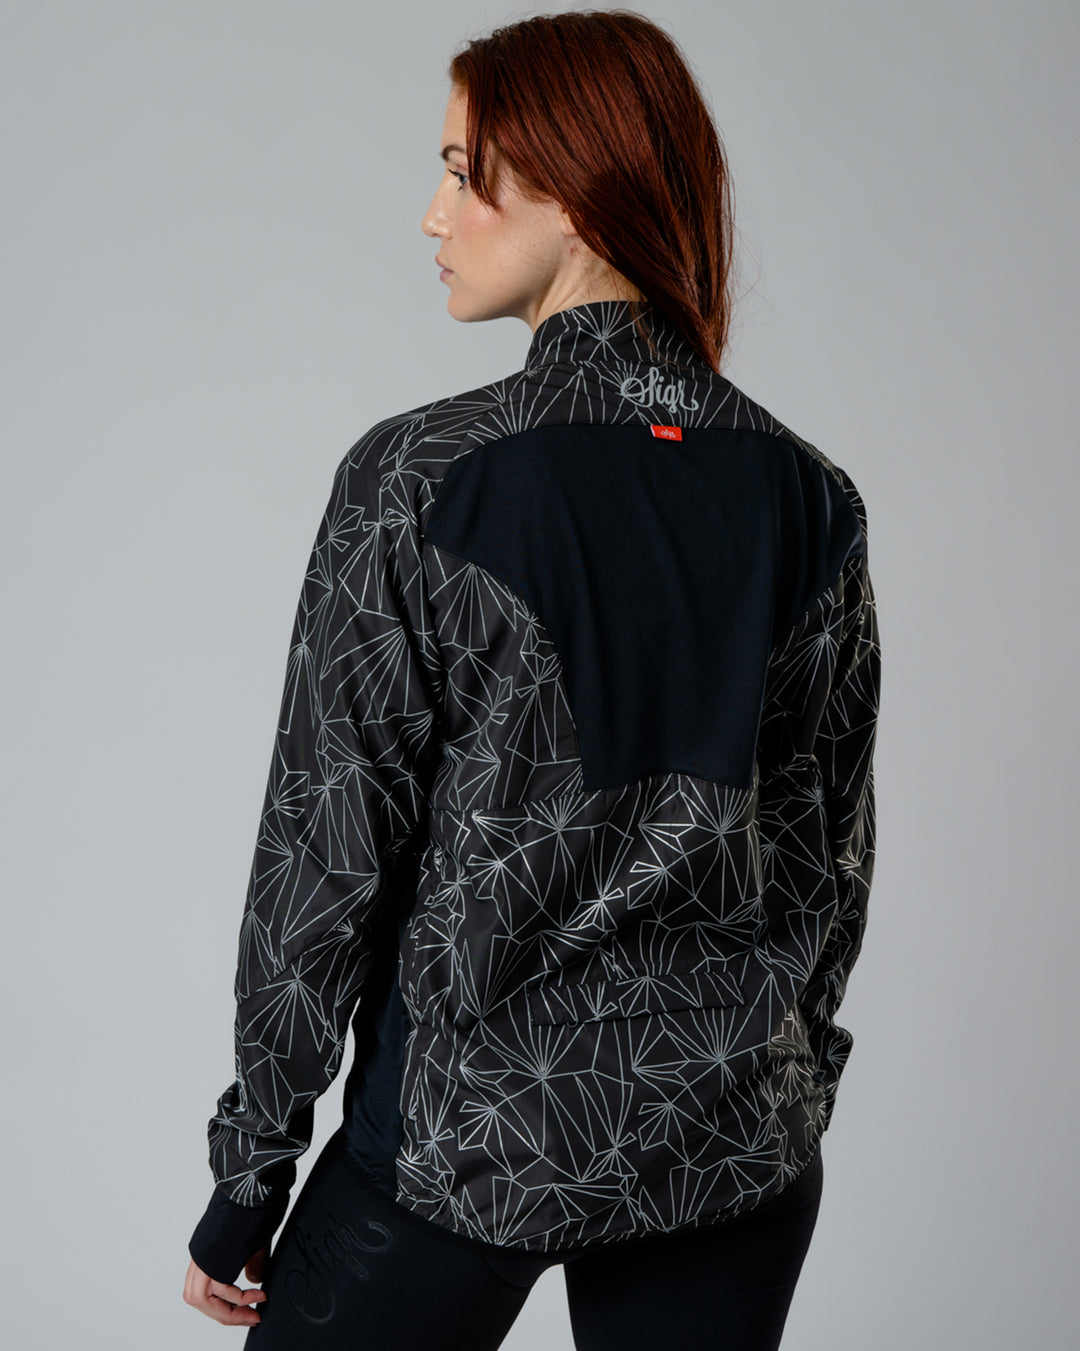 Norrsken Ice - Reflective Packable Wind Jacket for Women